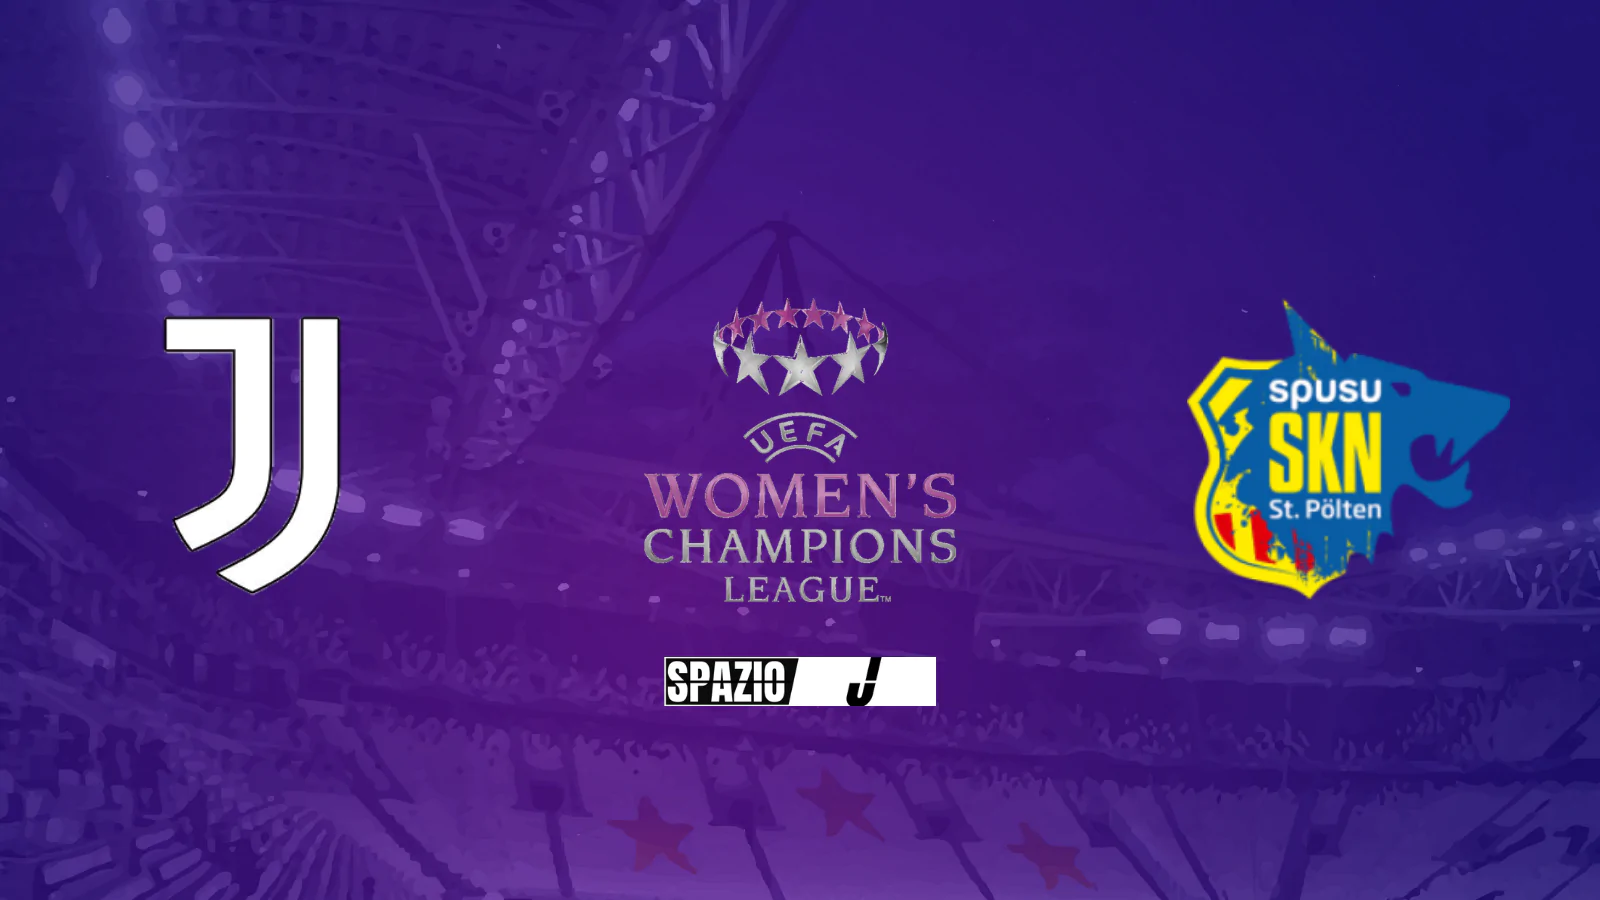 Juventus Women-St. Polten 4-1: prosegue il cammino delle Women in Champions League